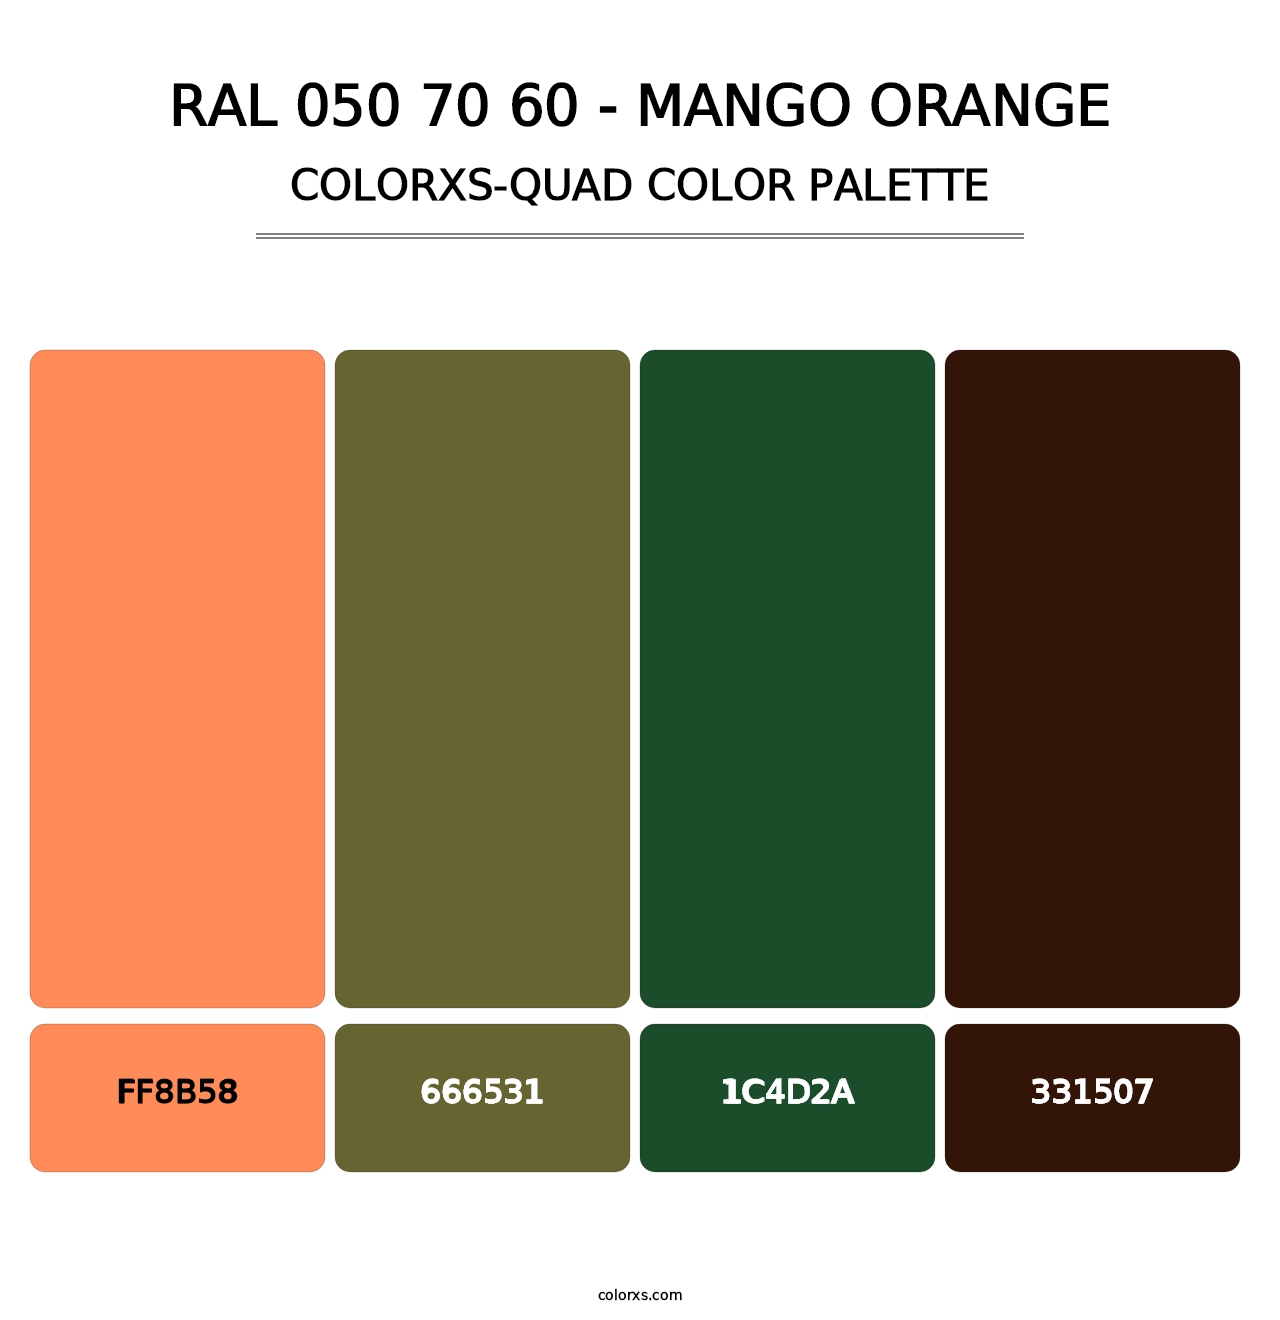 RAL 050 70 60 - Mango Orange - Colorxs Quad Palette